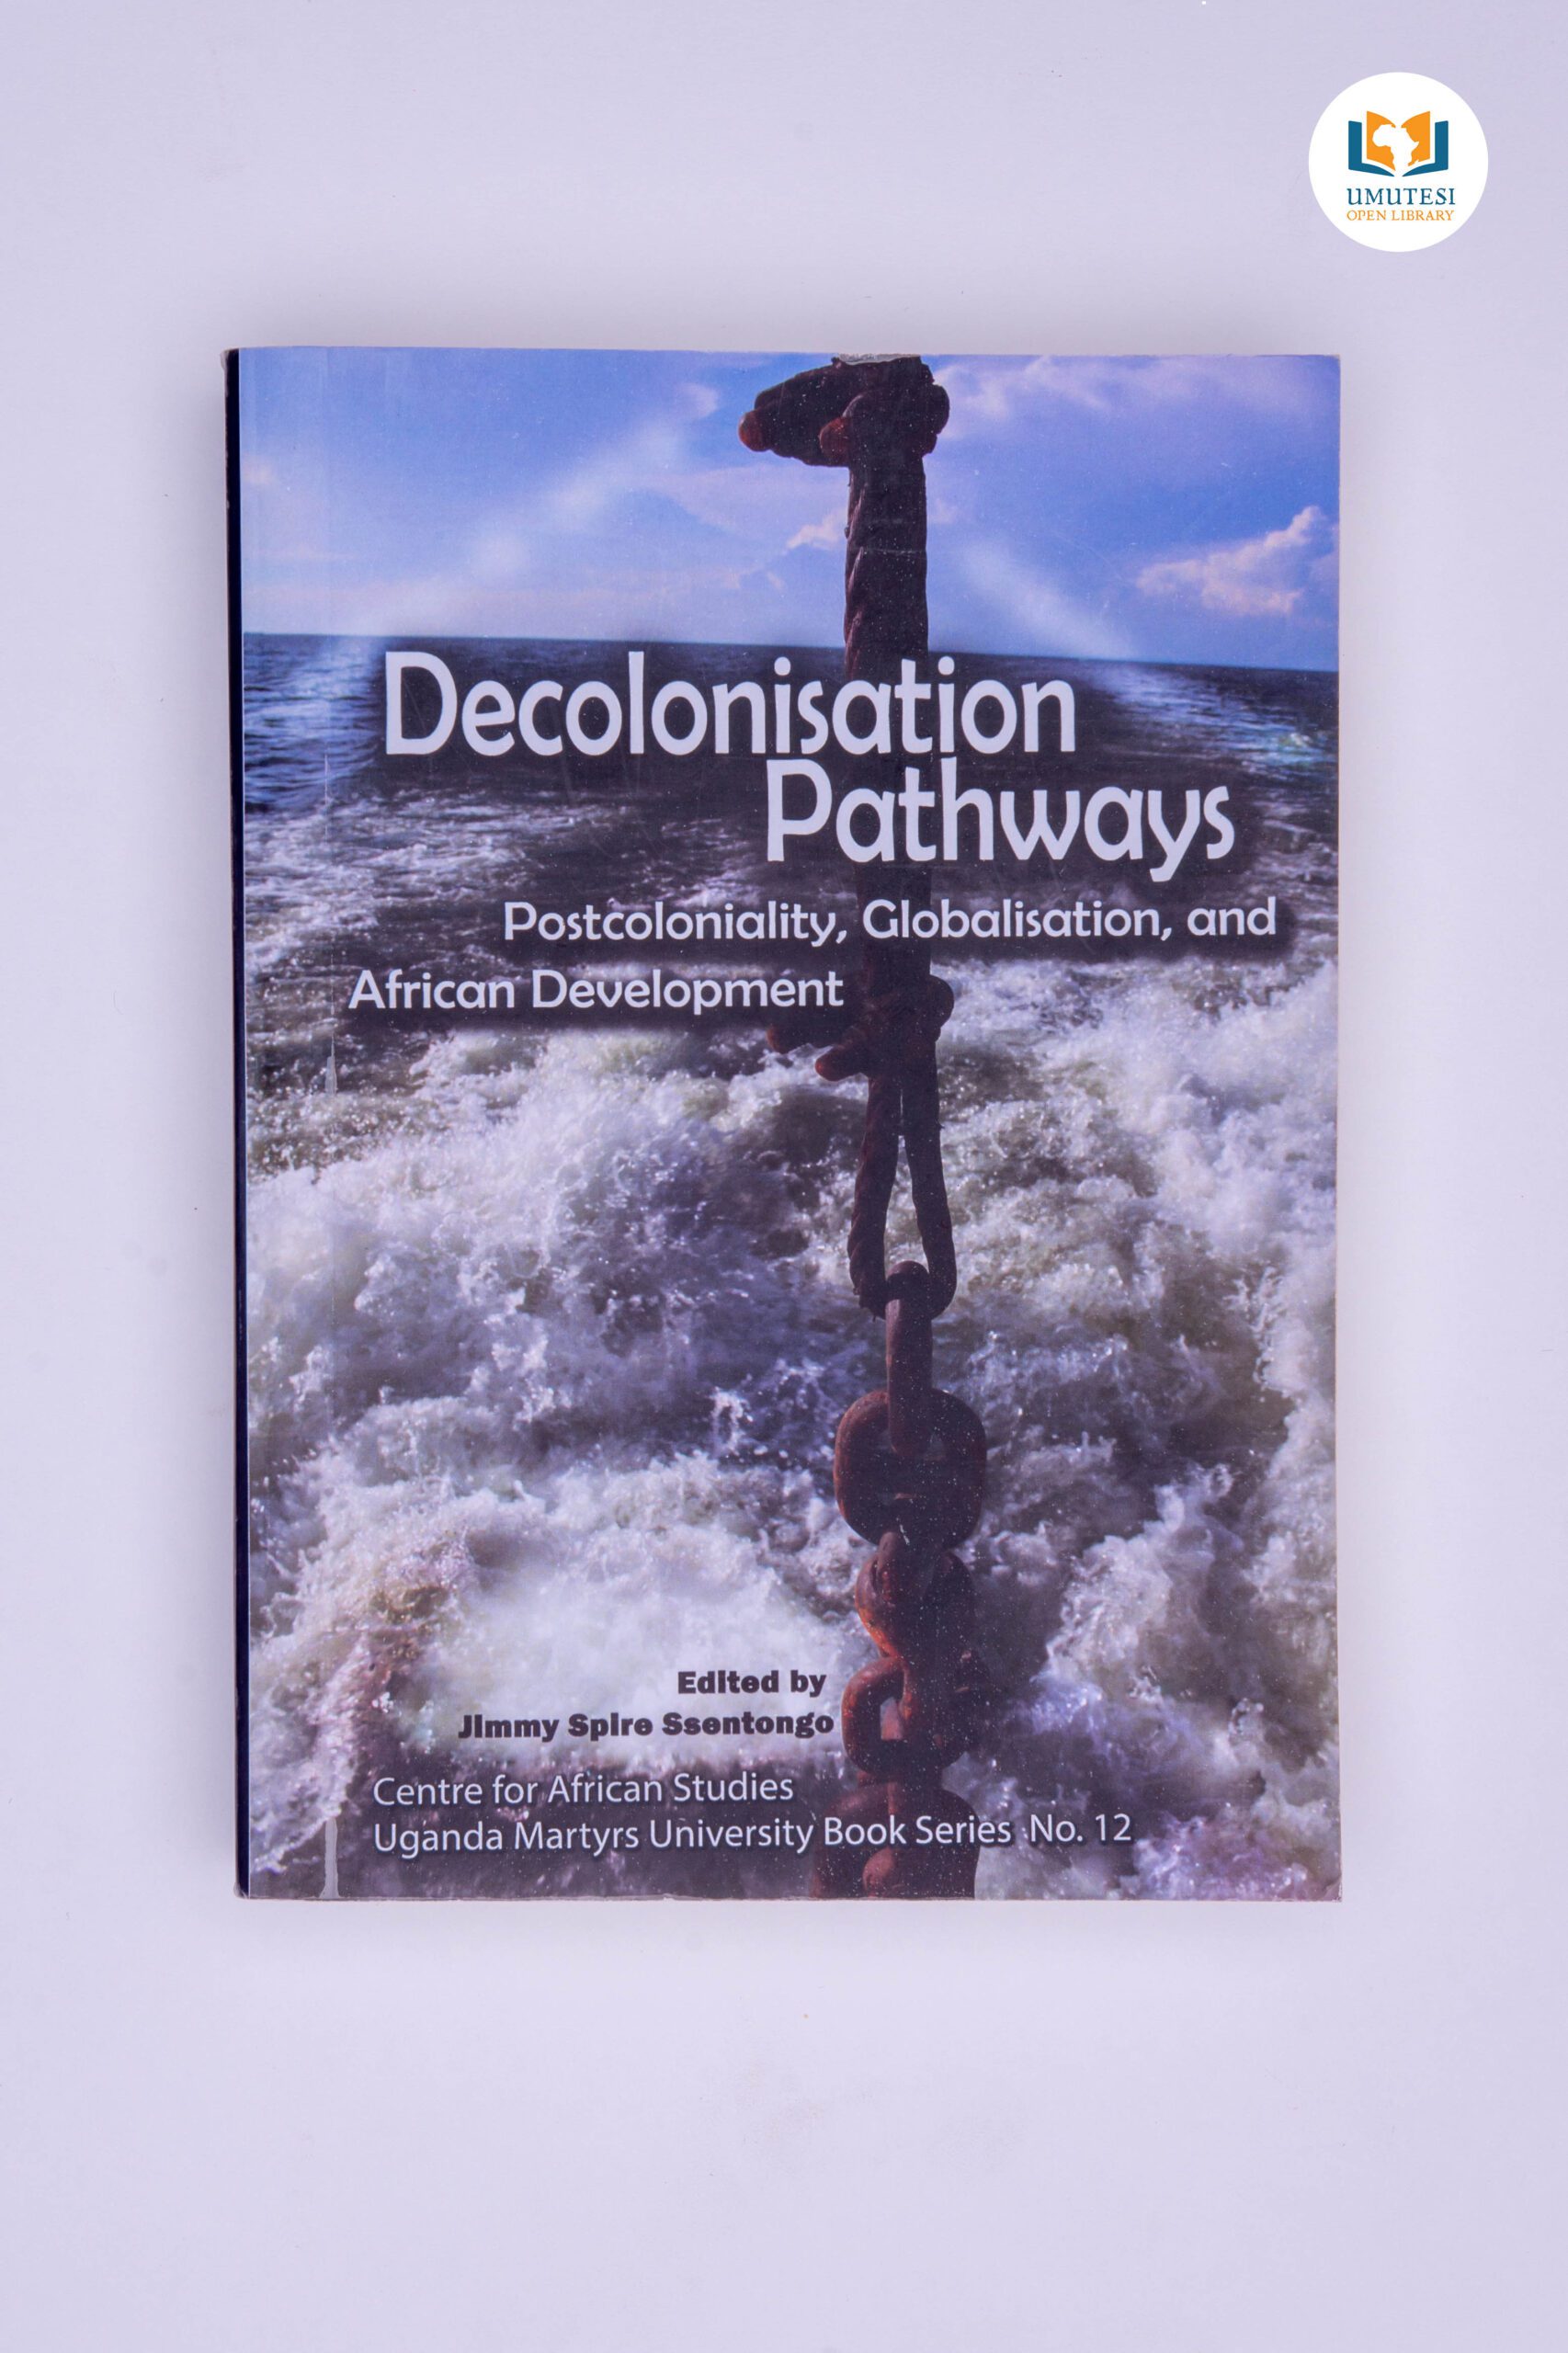 Decolonisation Pathways Edited by Jimmy Spire Ssentongo